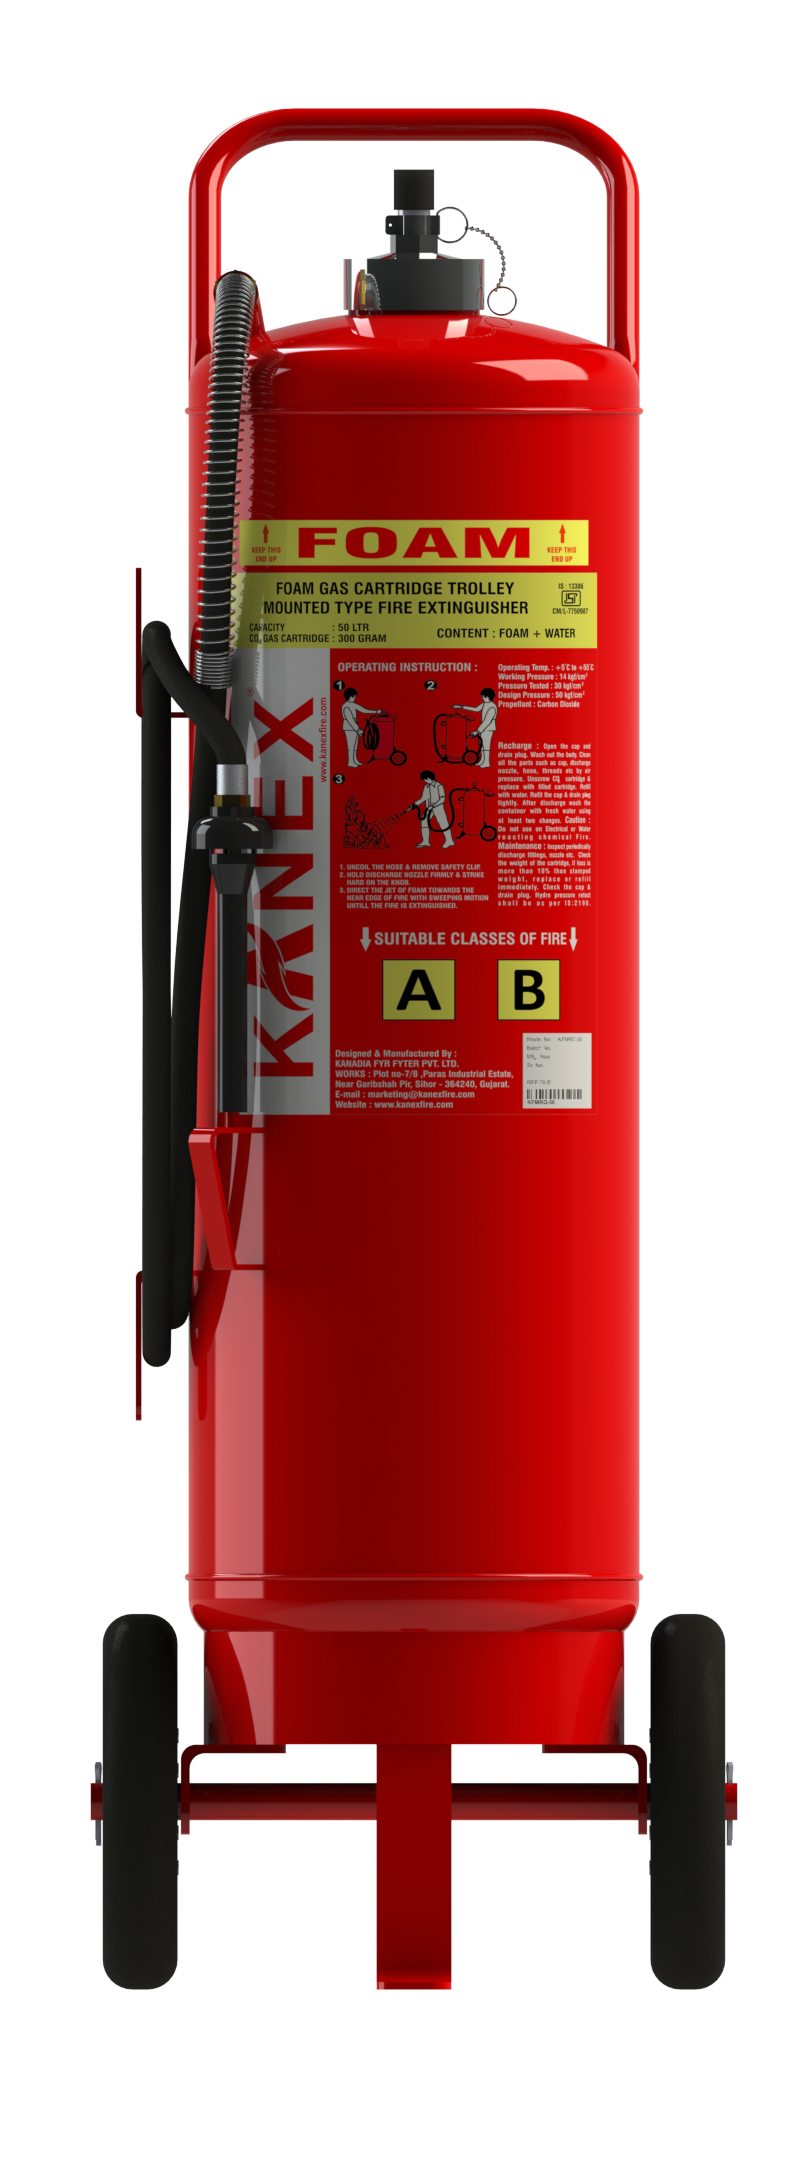 Extinguisher PNG Image